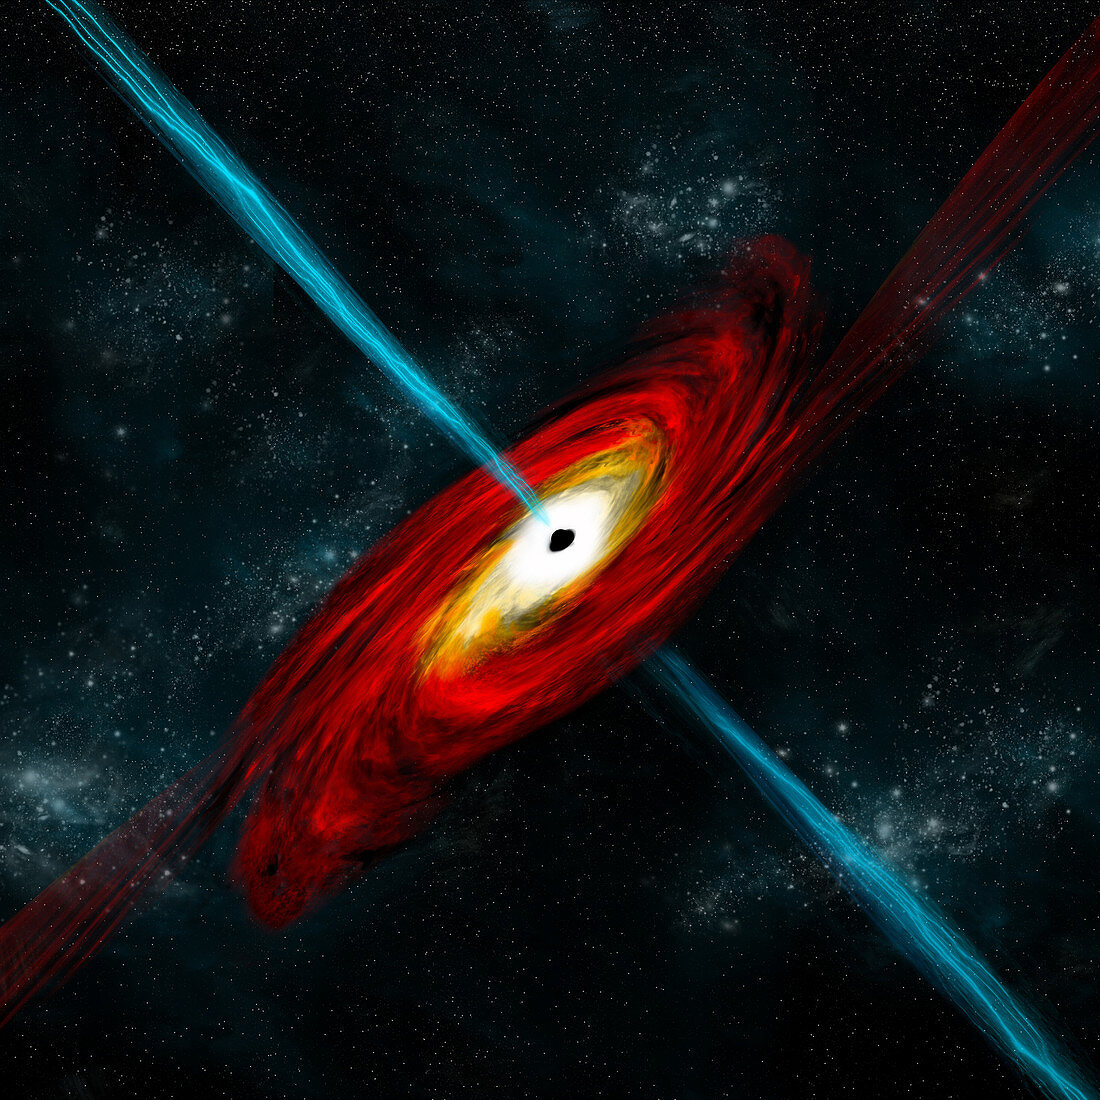 Black Hole Attracting Matter, Illustration